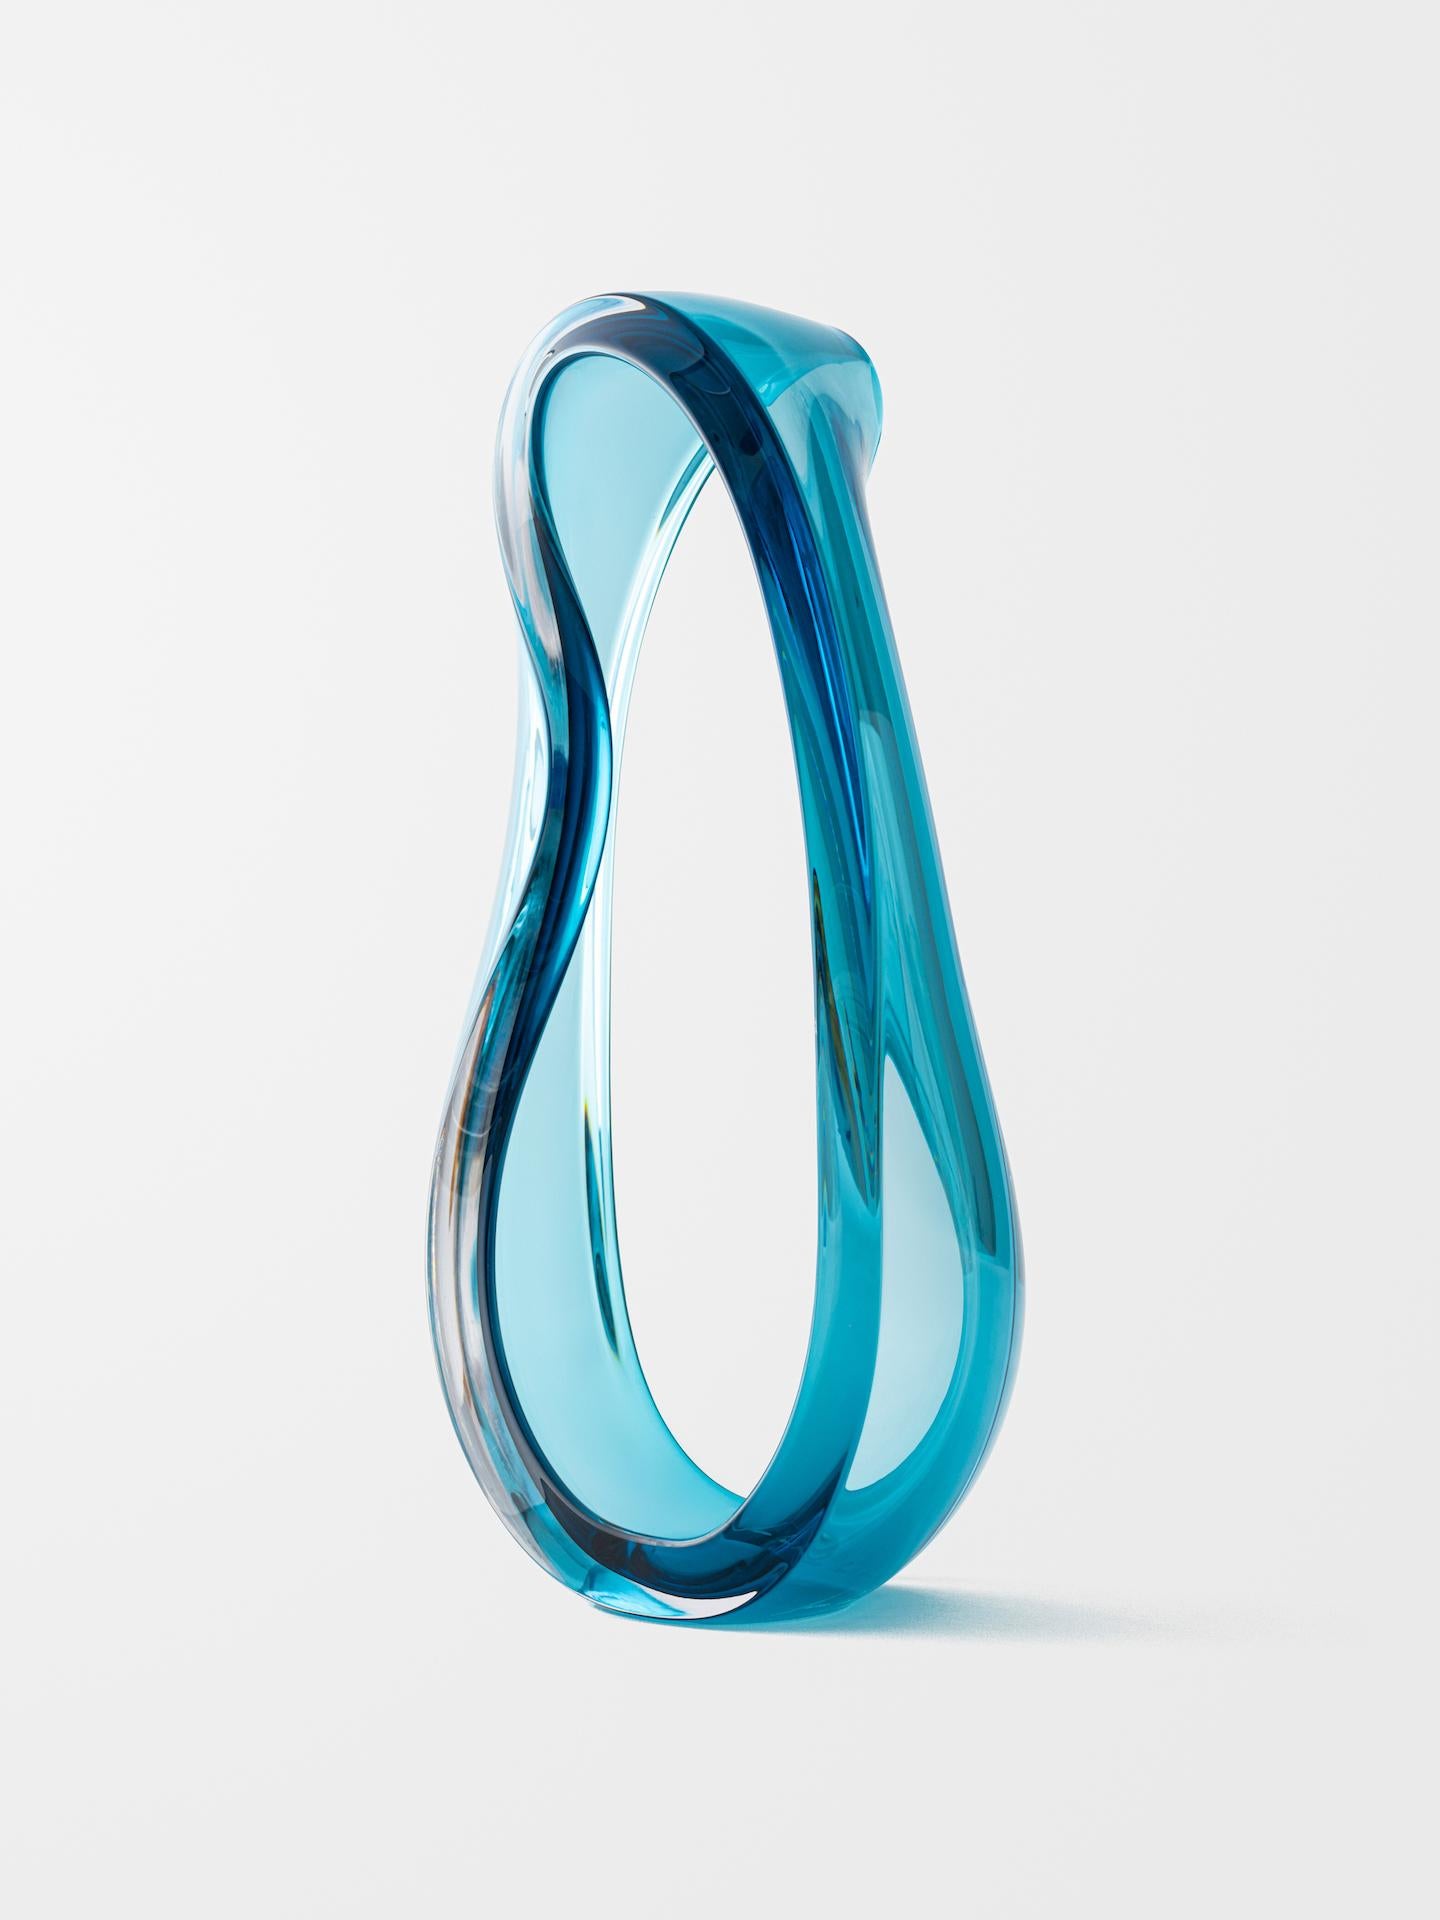 Loops (Azure) - Contemporary Sculpture by Jonas Noël Niedermann